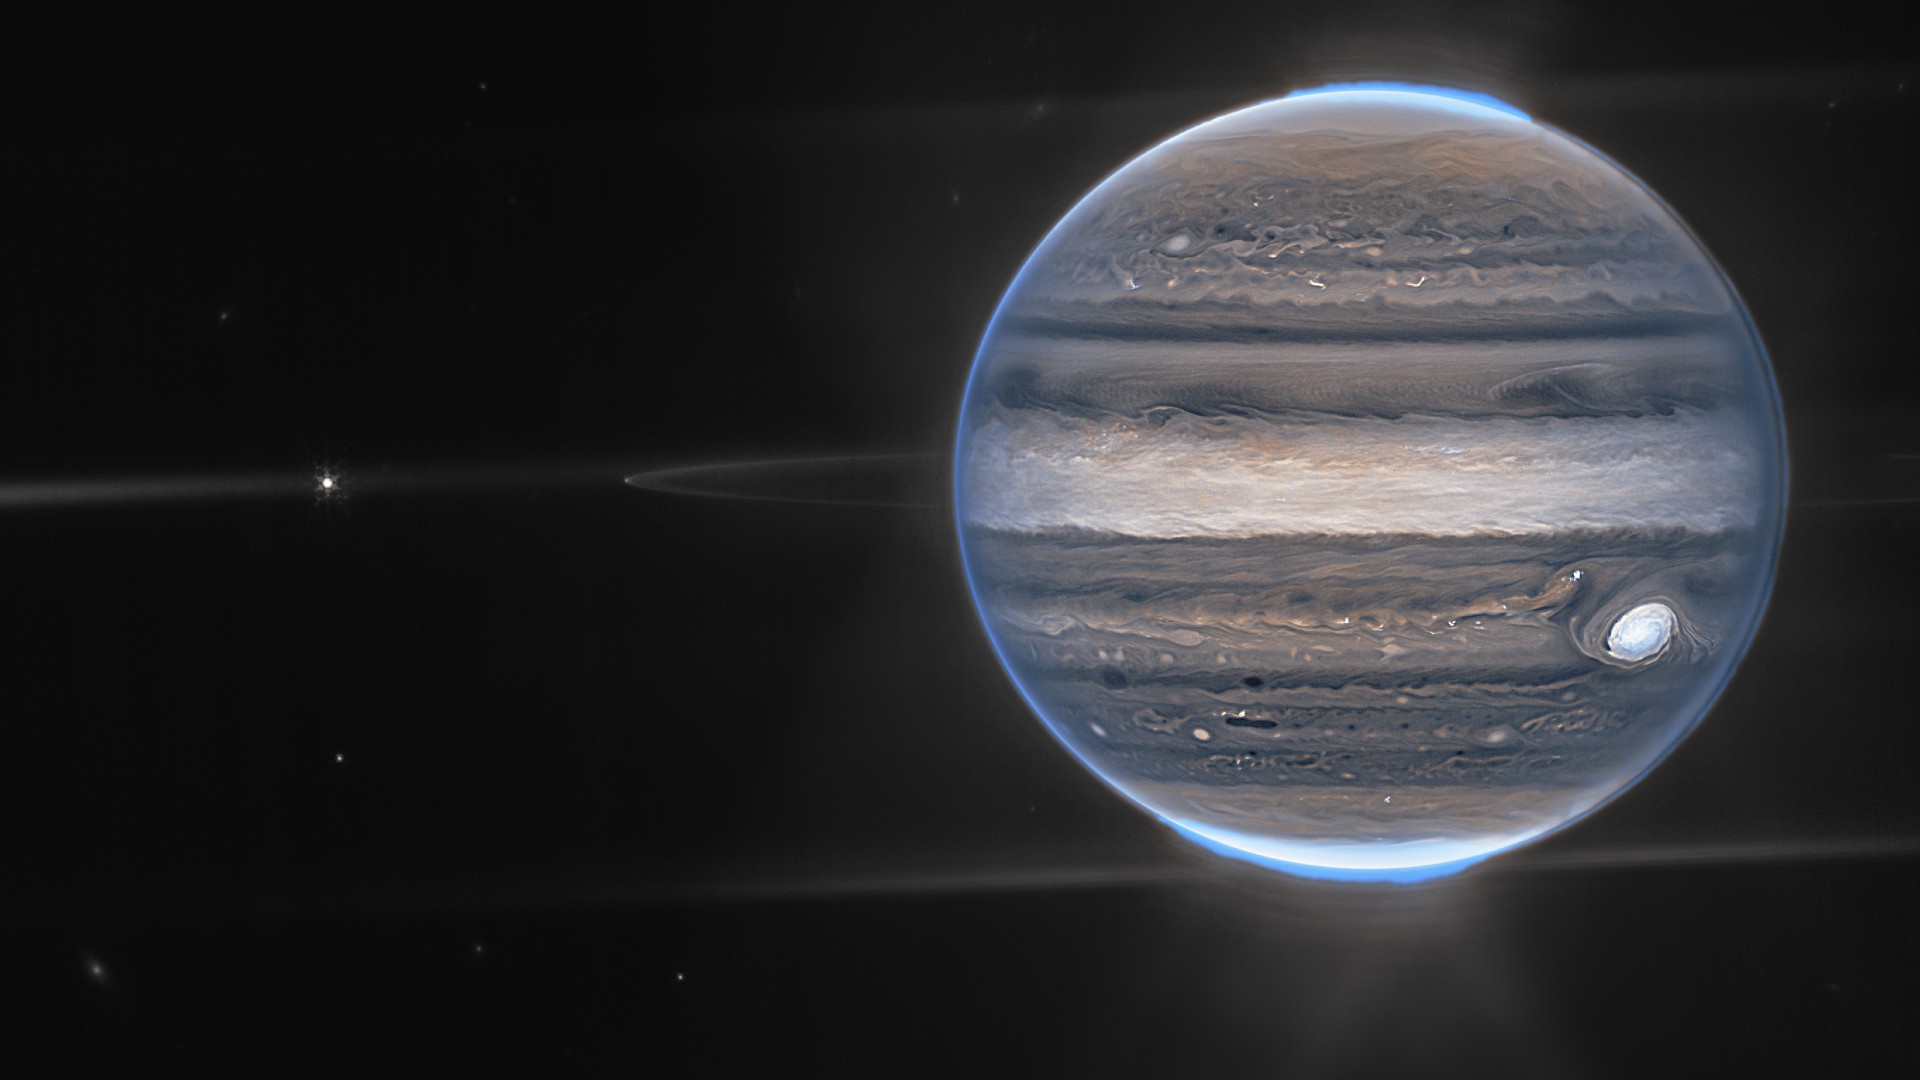 Jupiter's auroras look radiant in James Webb Space Telescope images | Space